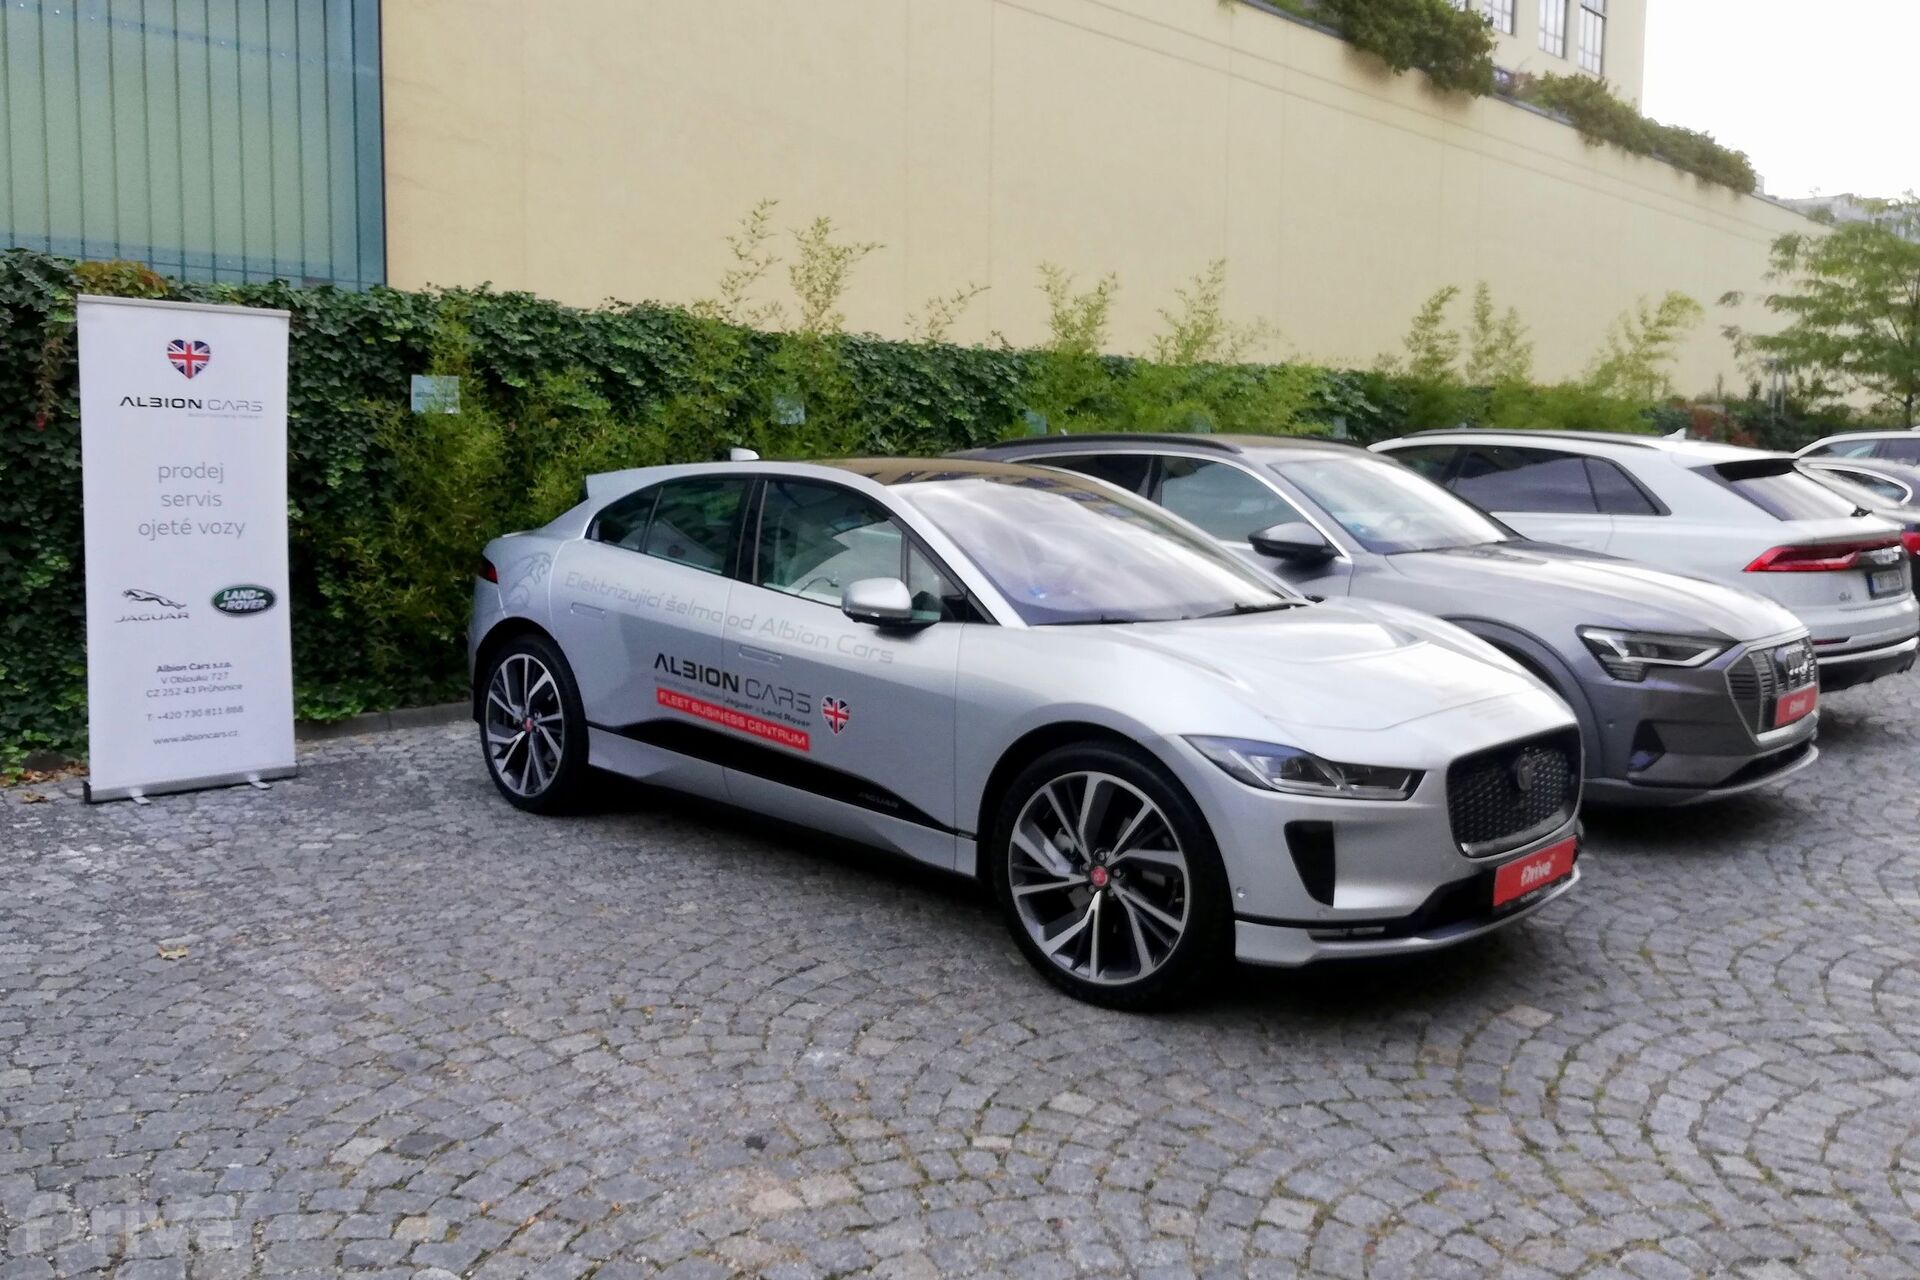 Audi e-tron a Jaguar I-PACE na MobileDrinku